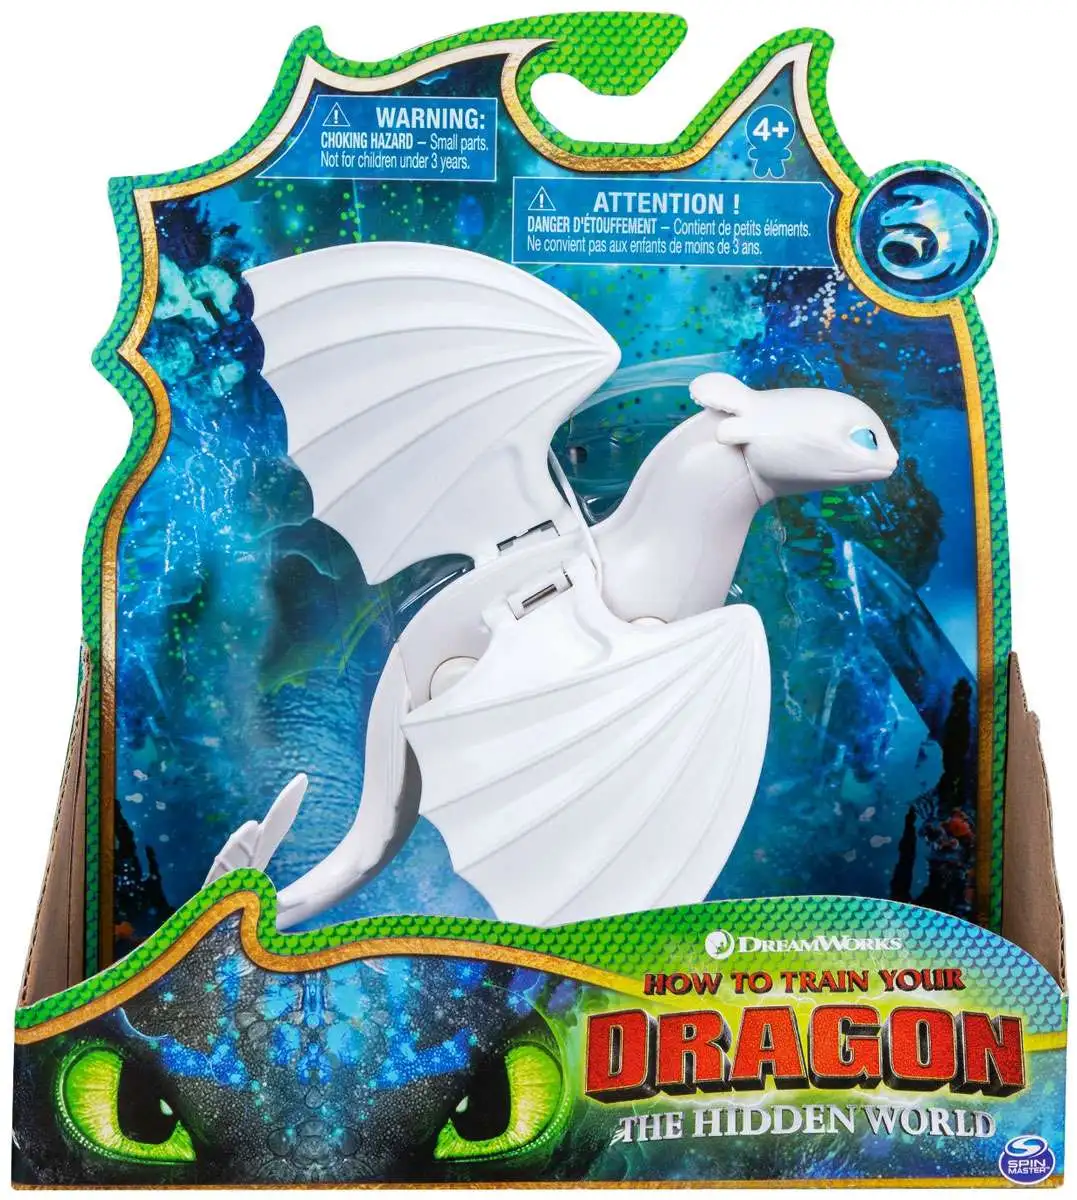 How To Train Your Dragon Hidden World Dragon Lair LightFury 